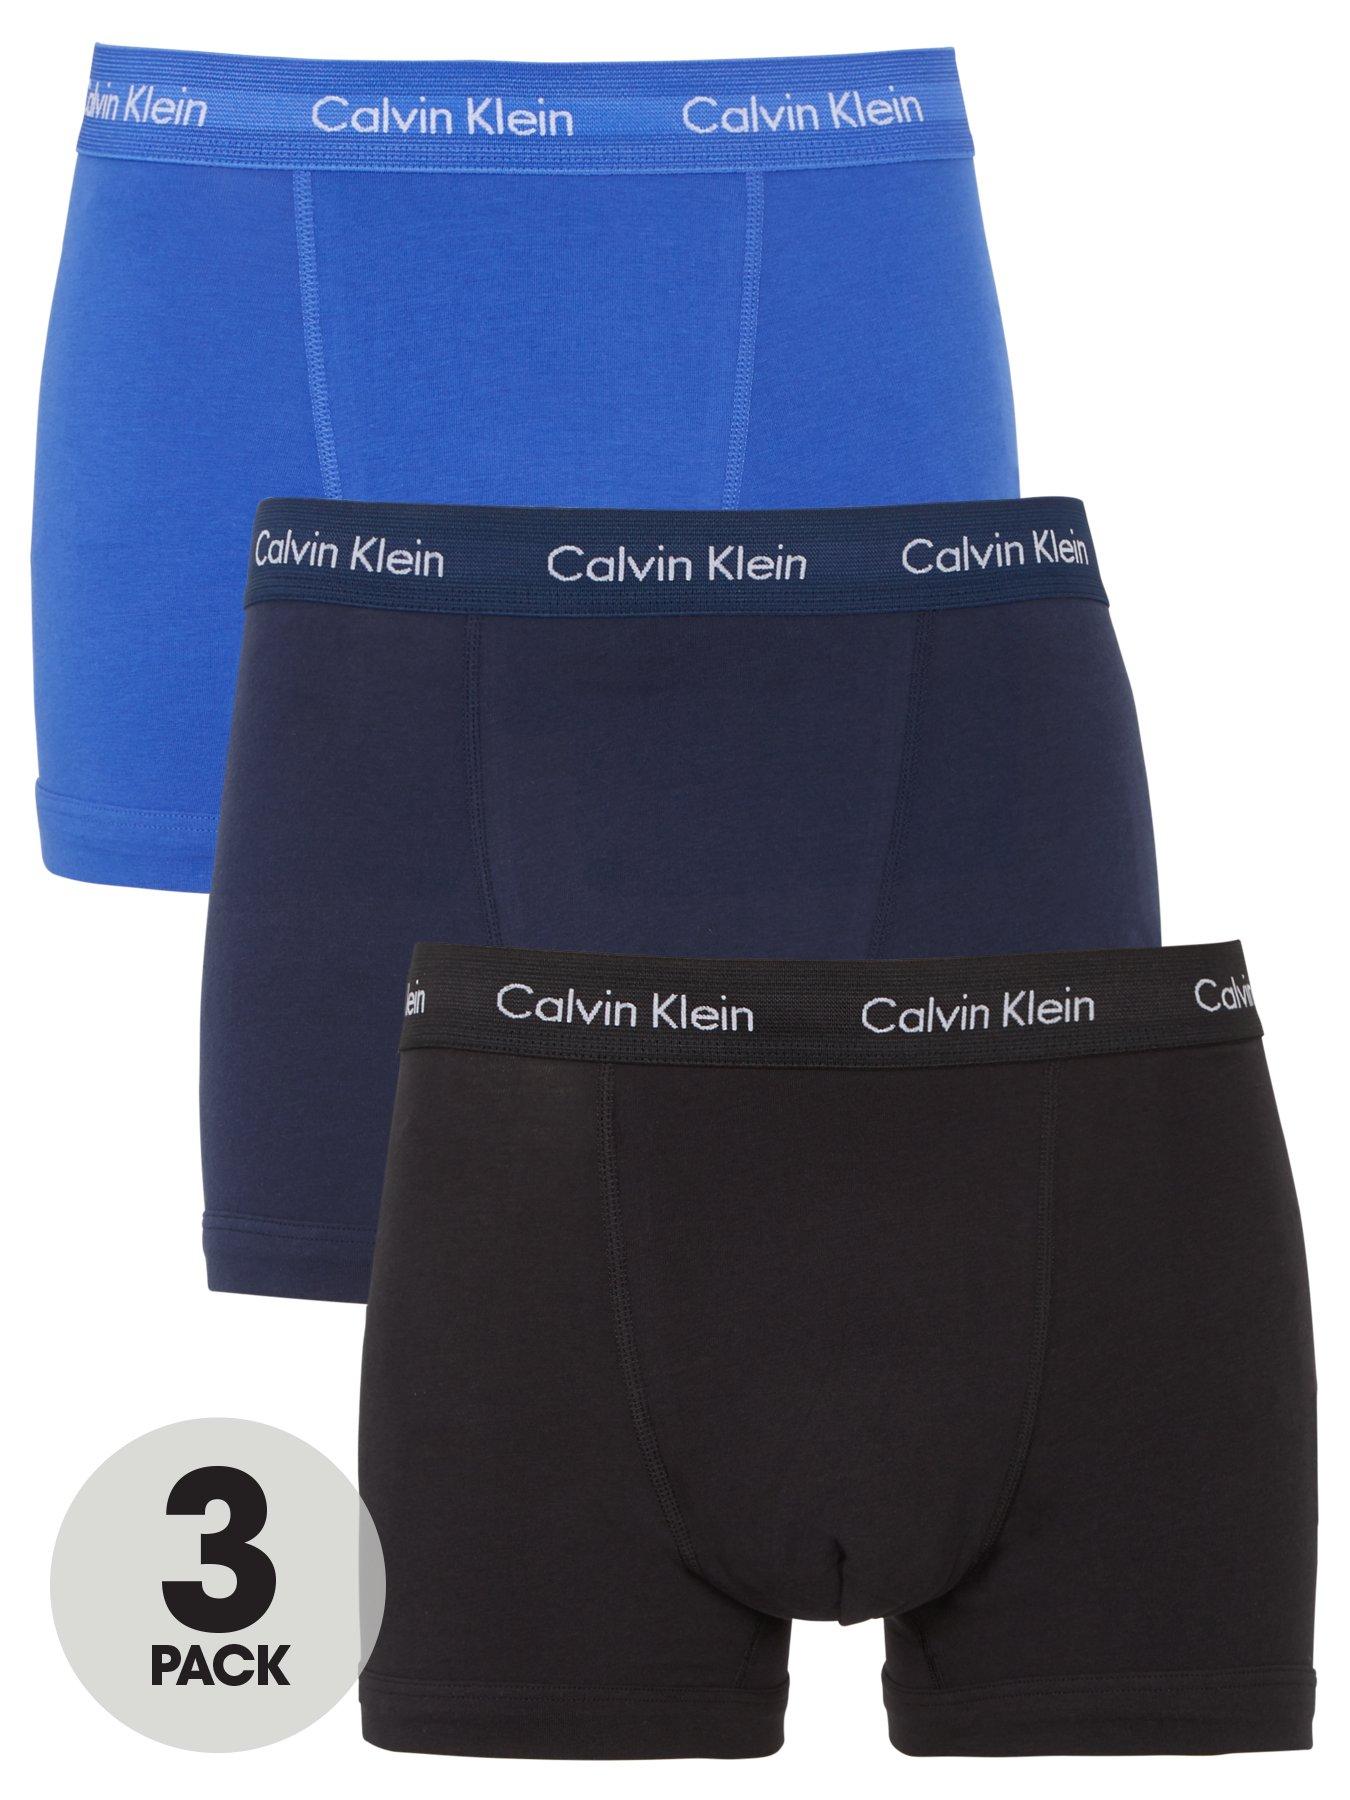 Men's Tri Blend Boxer Briefs 3, Columbia Sportswear